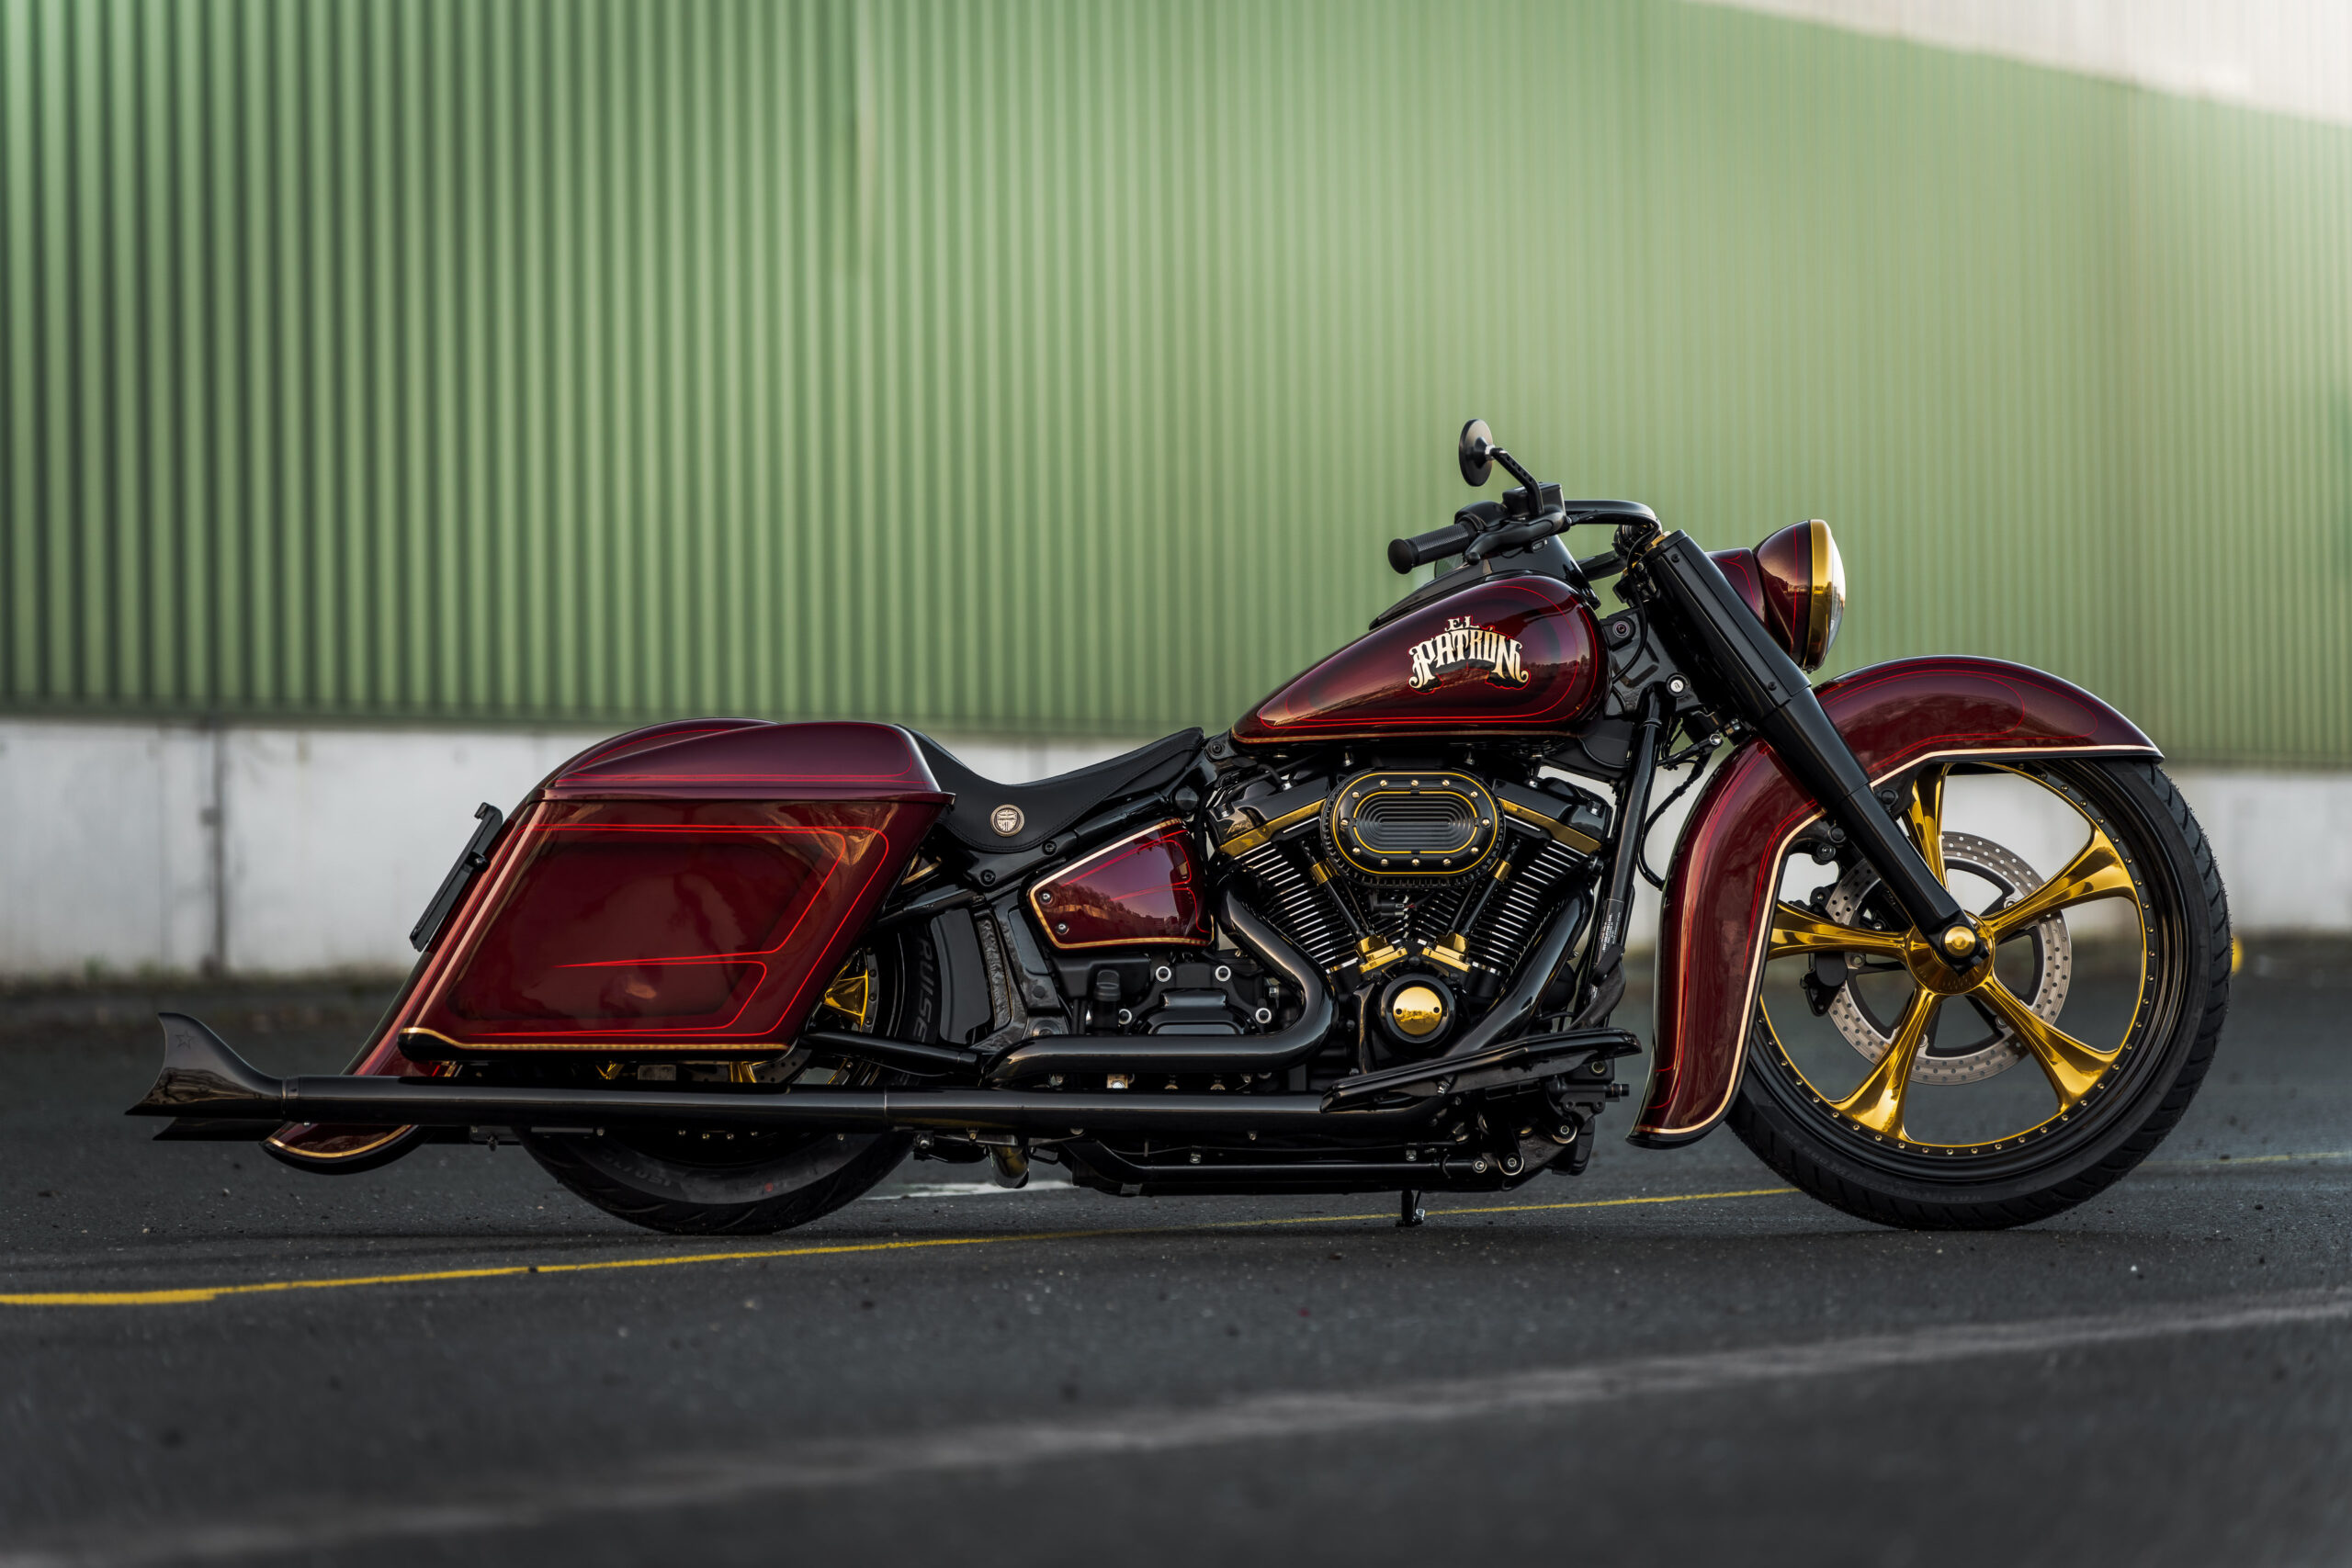 Customized Harley-Davidson Heritage Softail motorcycles by Thunderbike